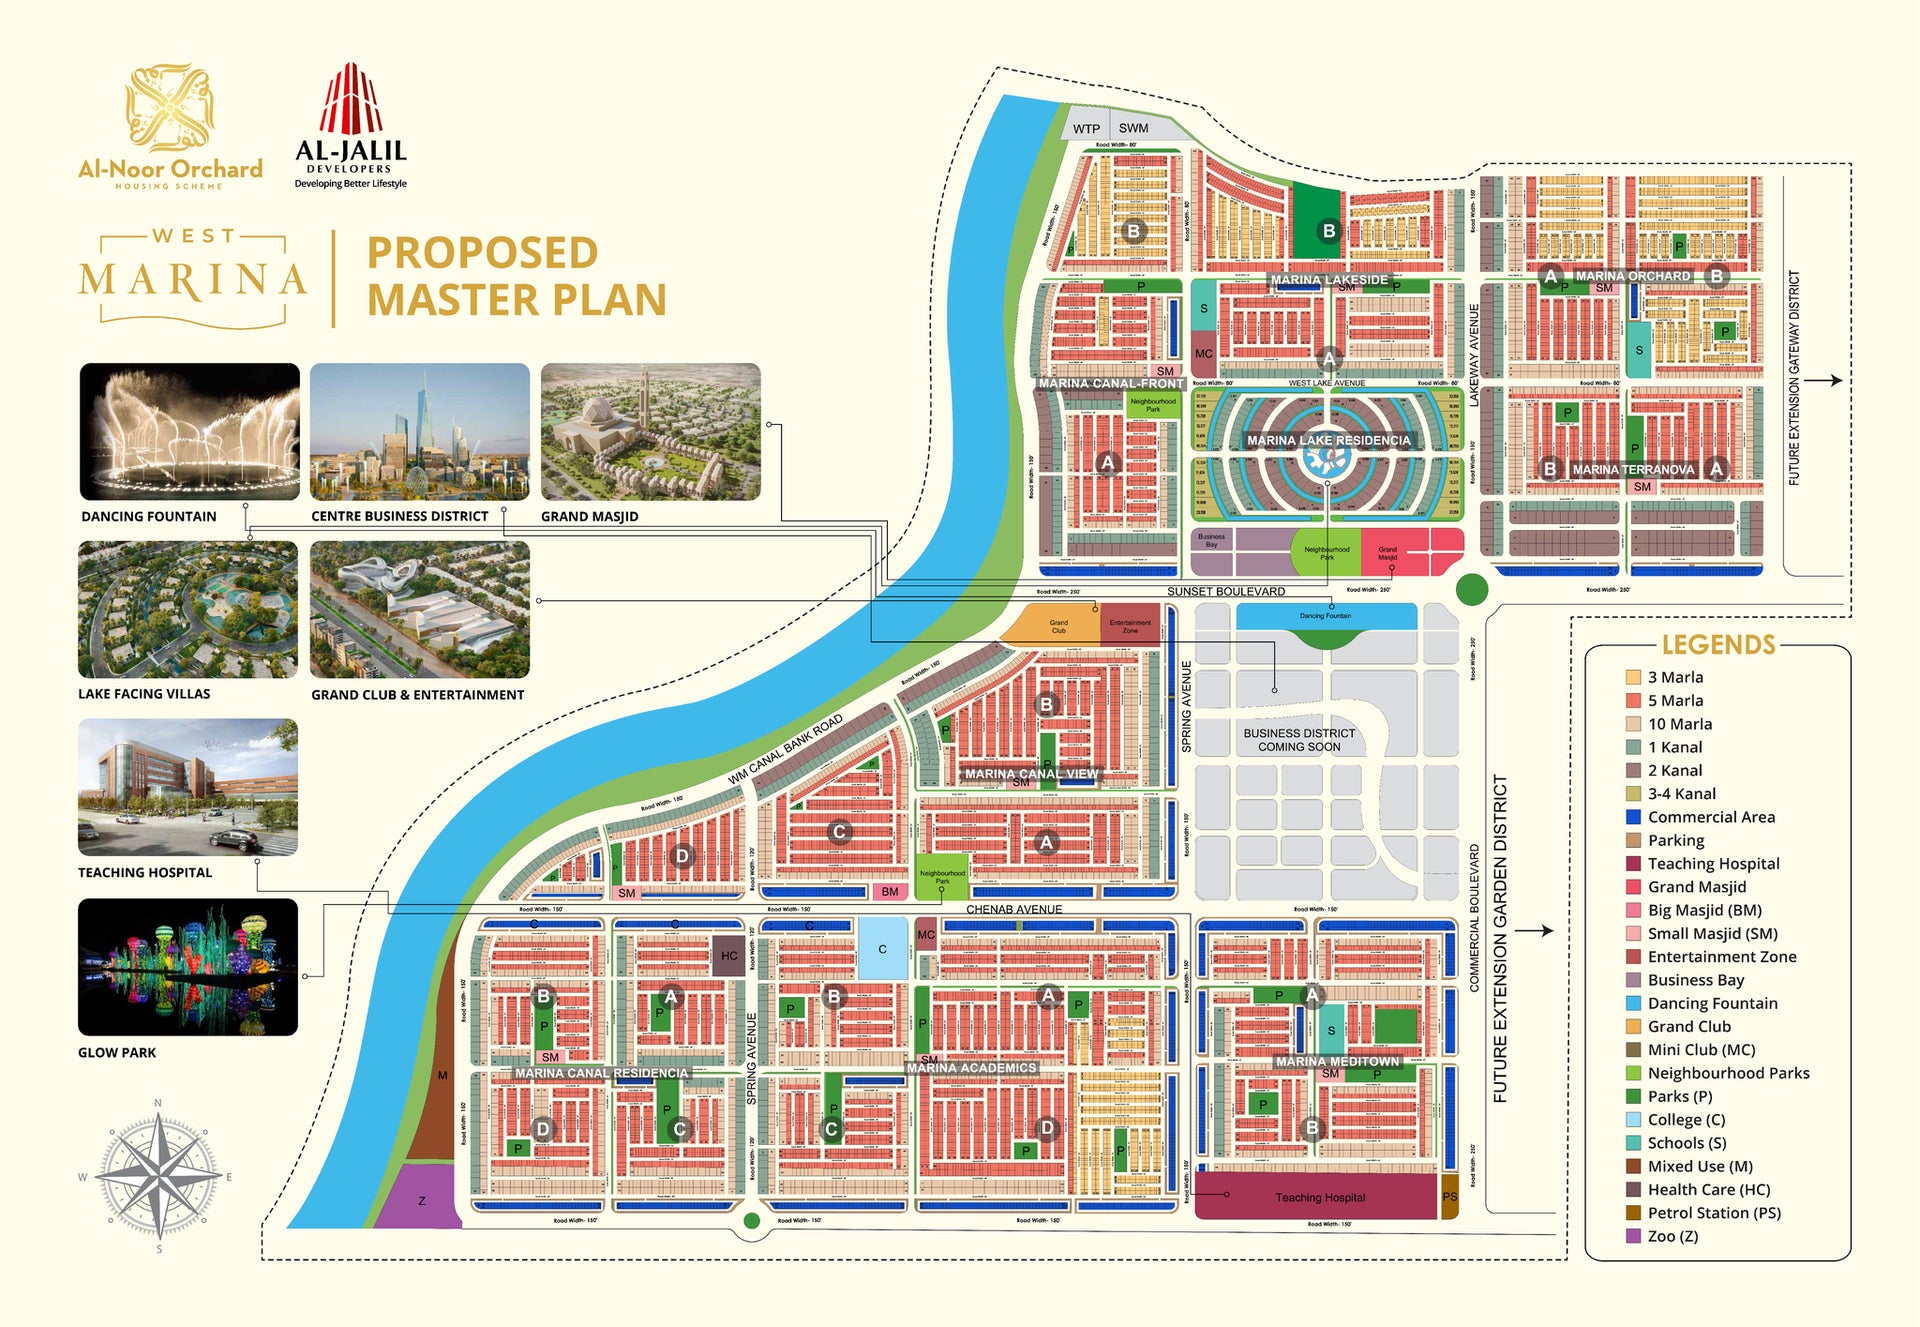 West Marina Proposed Master Plan